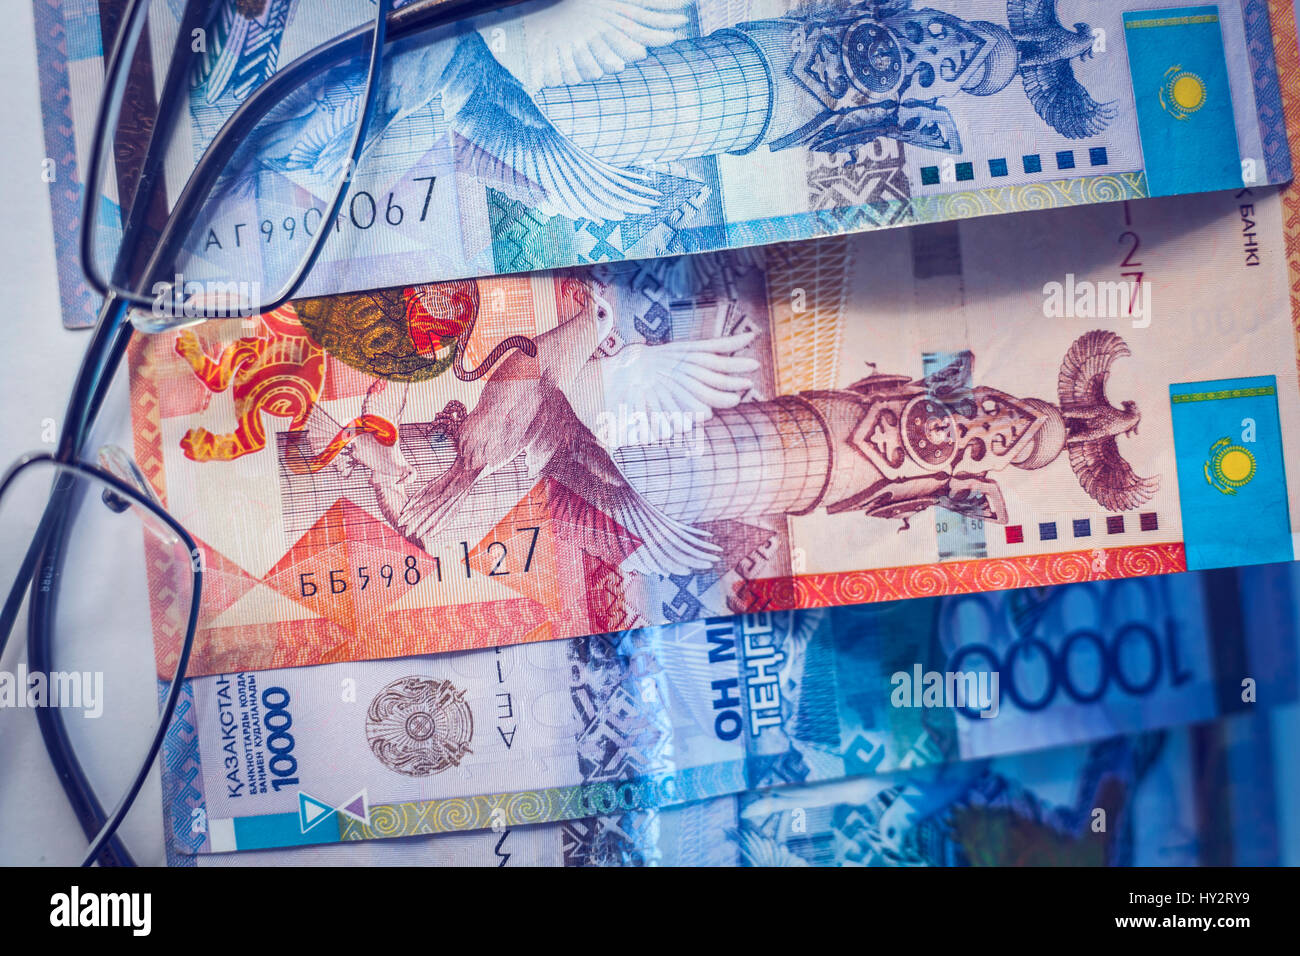 Tenge, Kazakh money and glasses. Kazakhstan National Currency Stock Photo